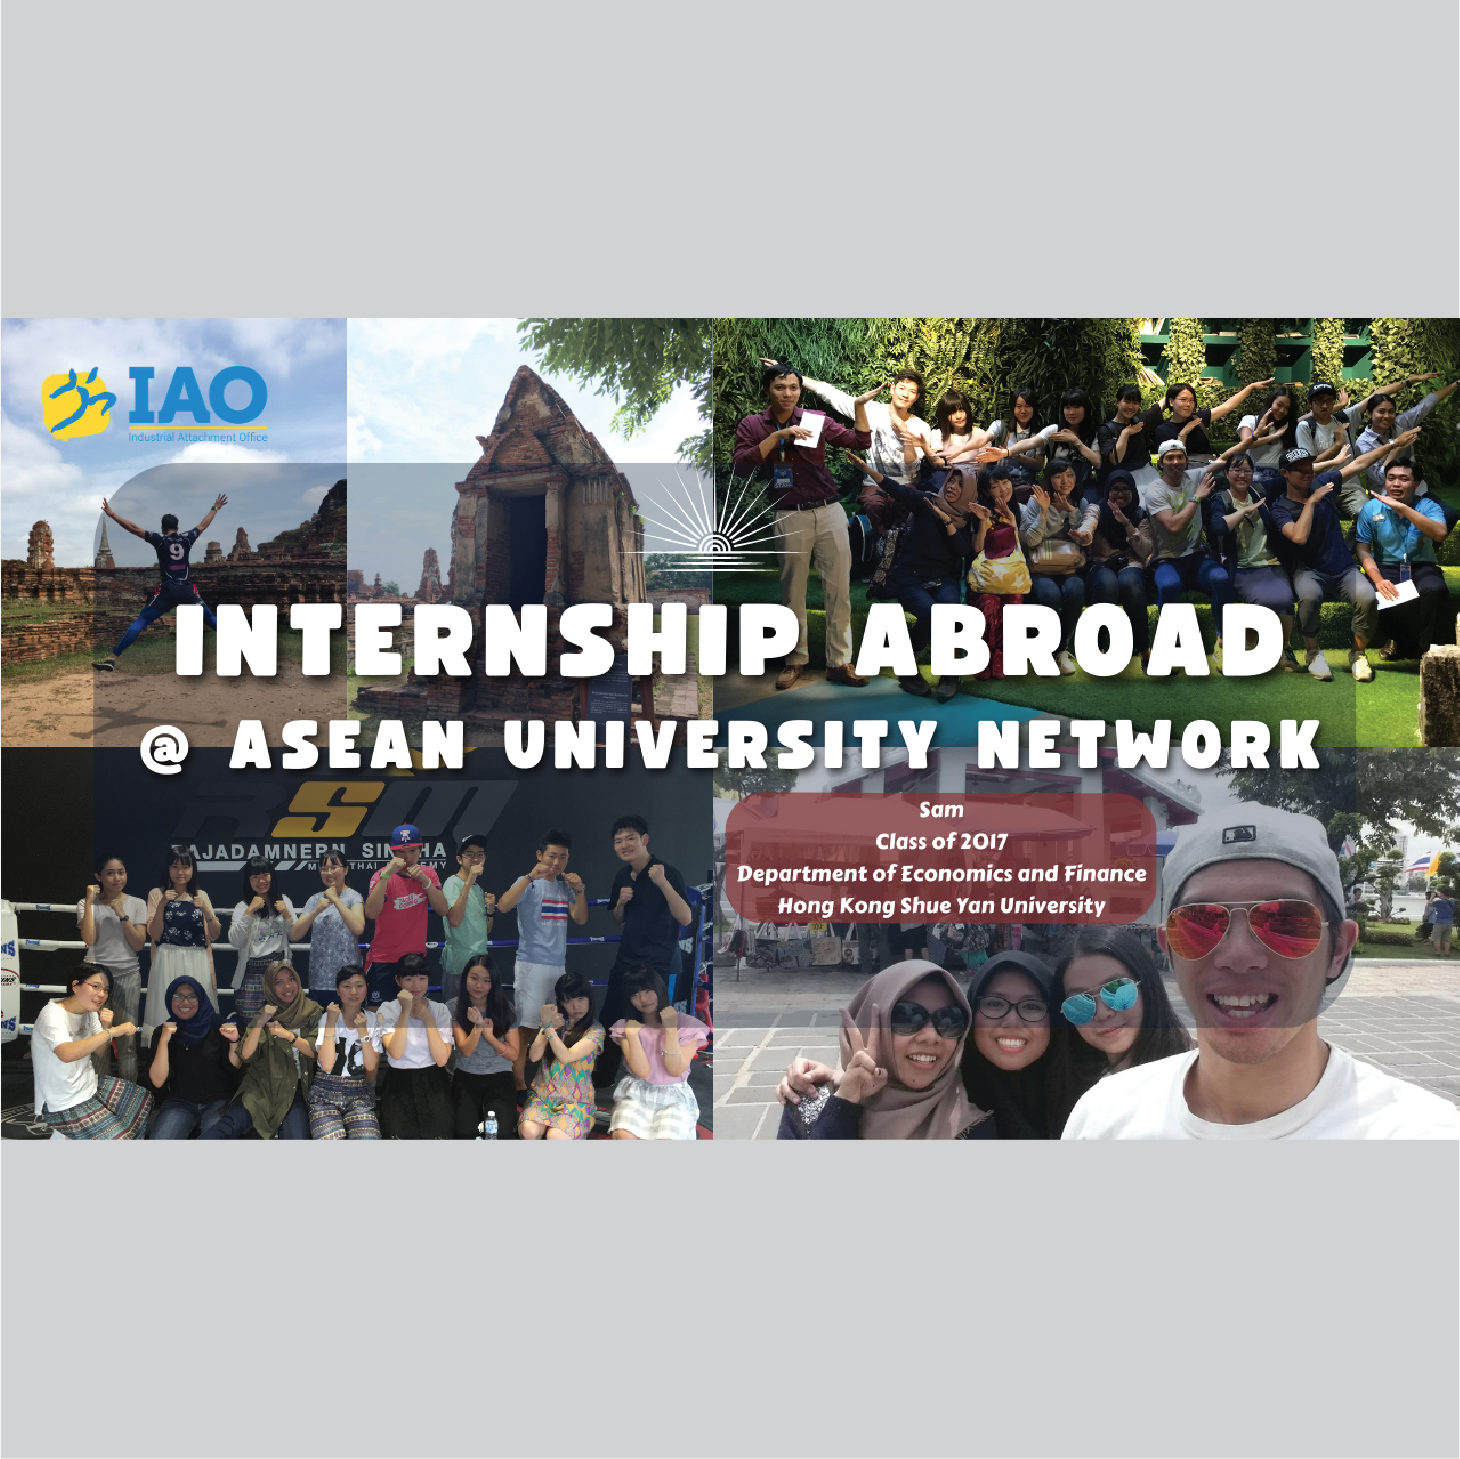 My Internship Experience at ASEAN University Network